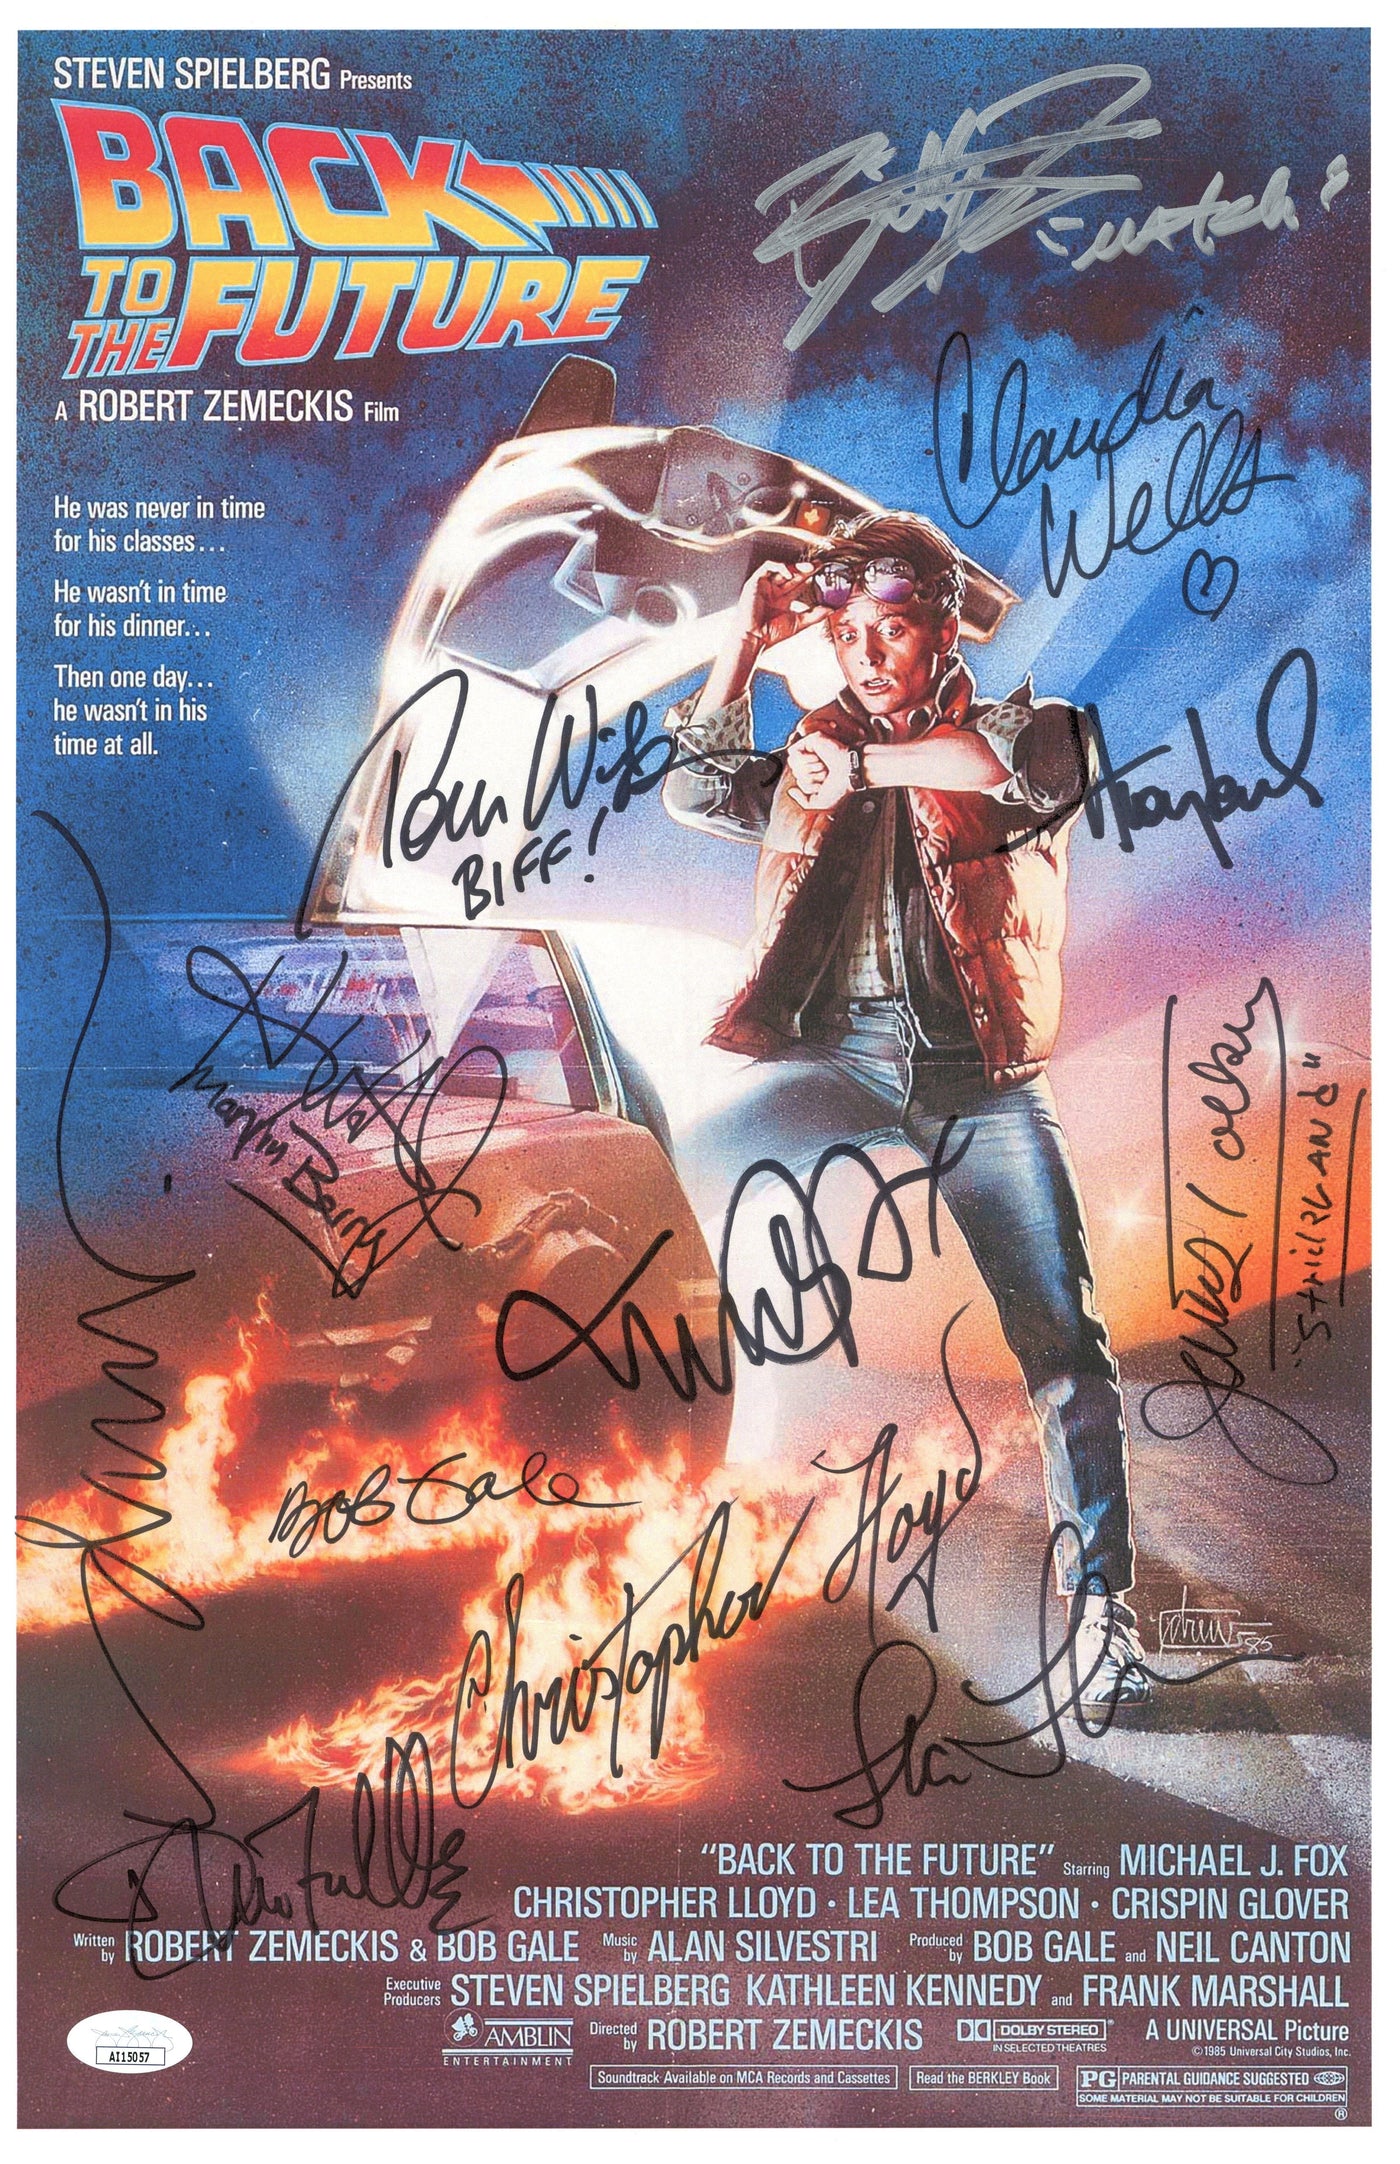 Michael J. Fox Signed 11x17 Photo Back to the Future Cast Autographed JSA COA